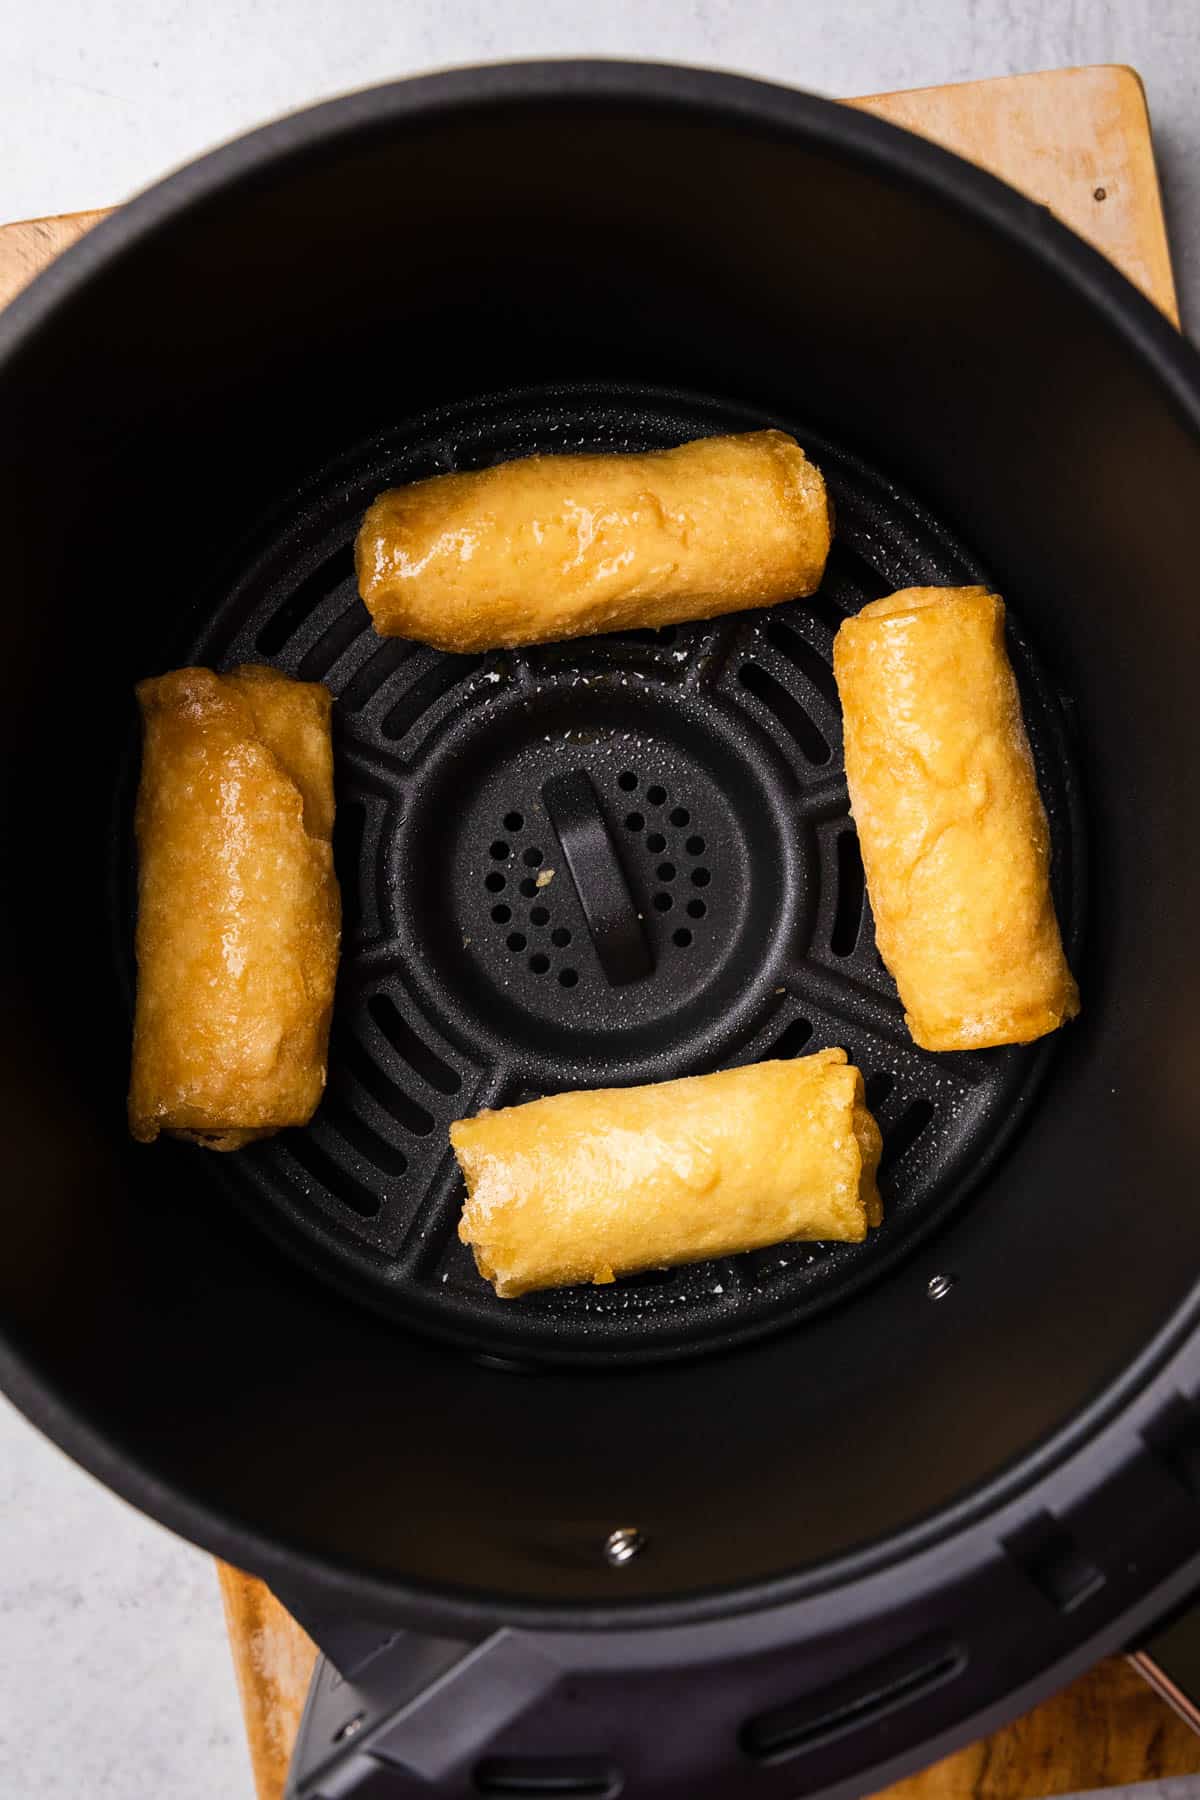 tai pei egg rolls in the air fryer basket